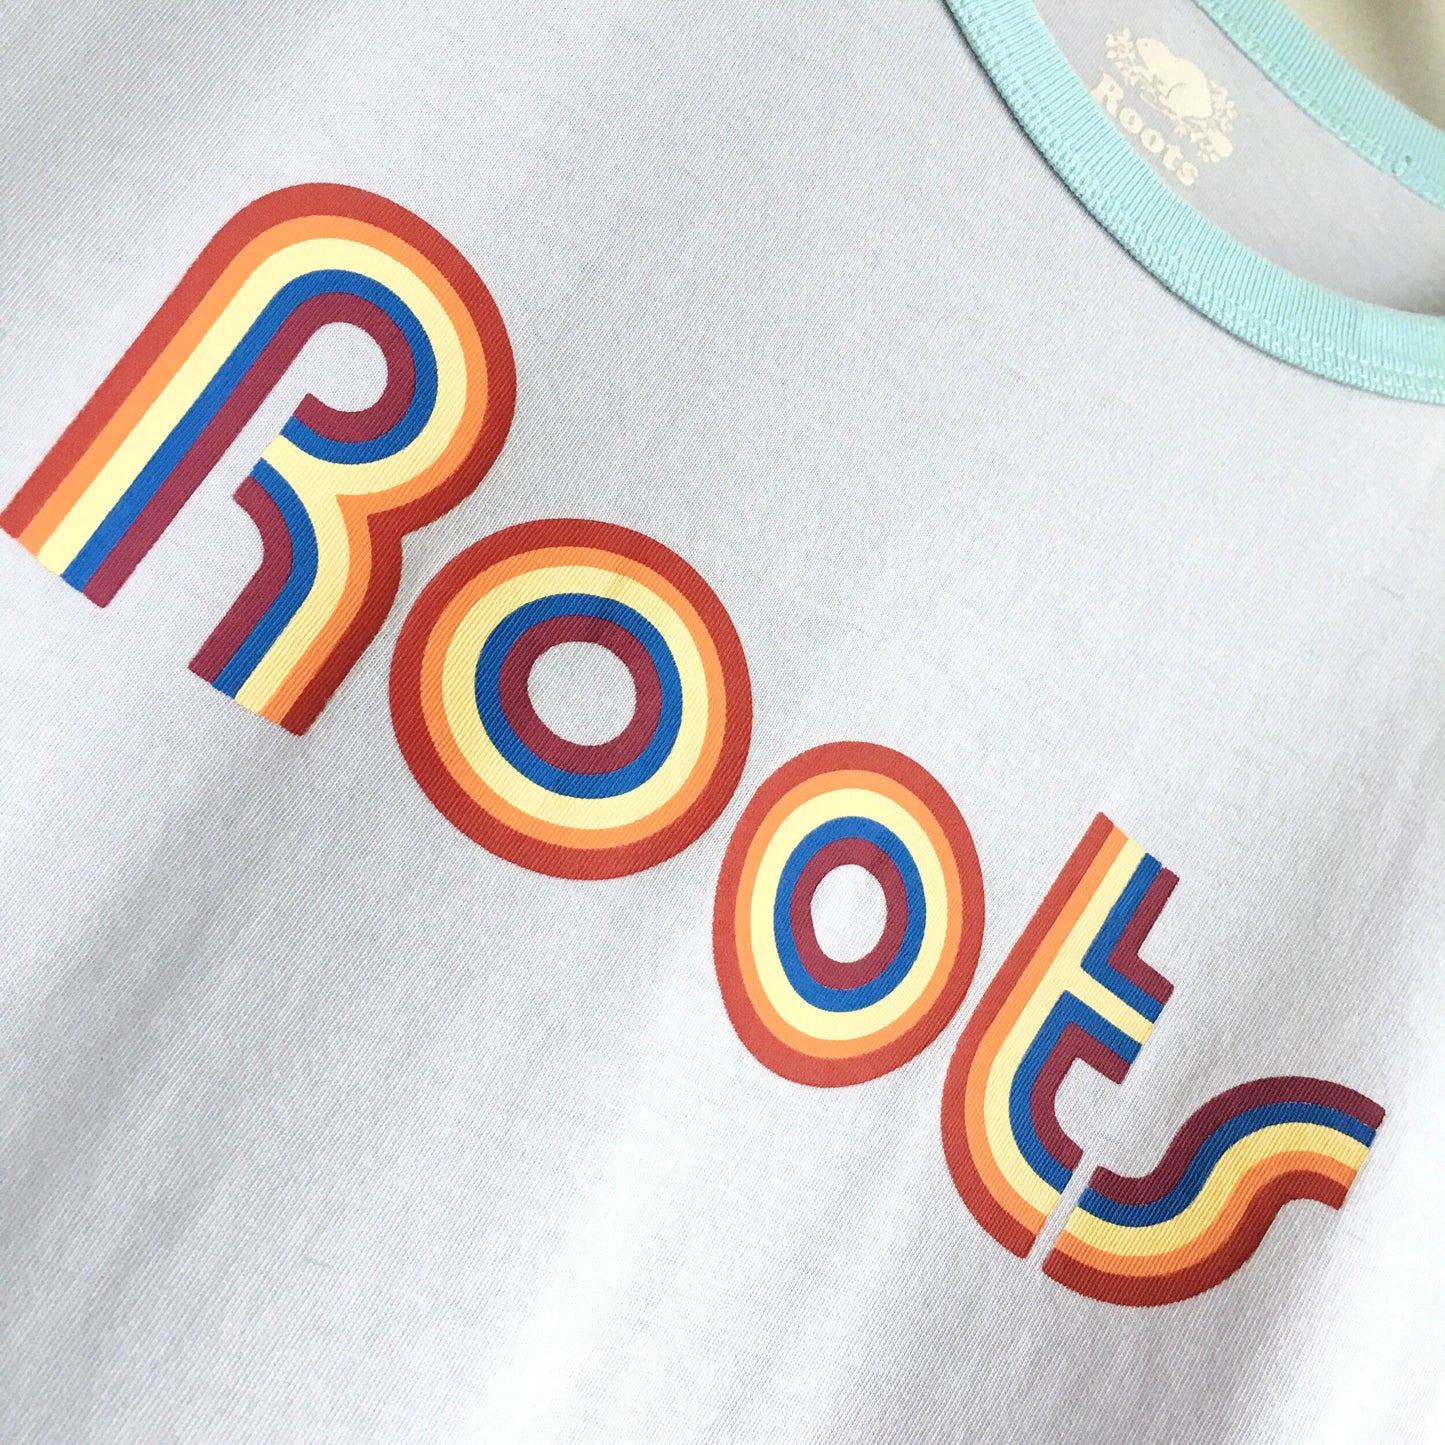 Roots disco pride graphic tee - size Medium